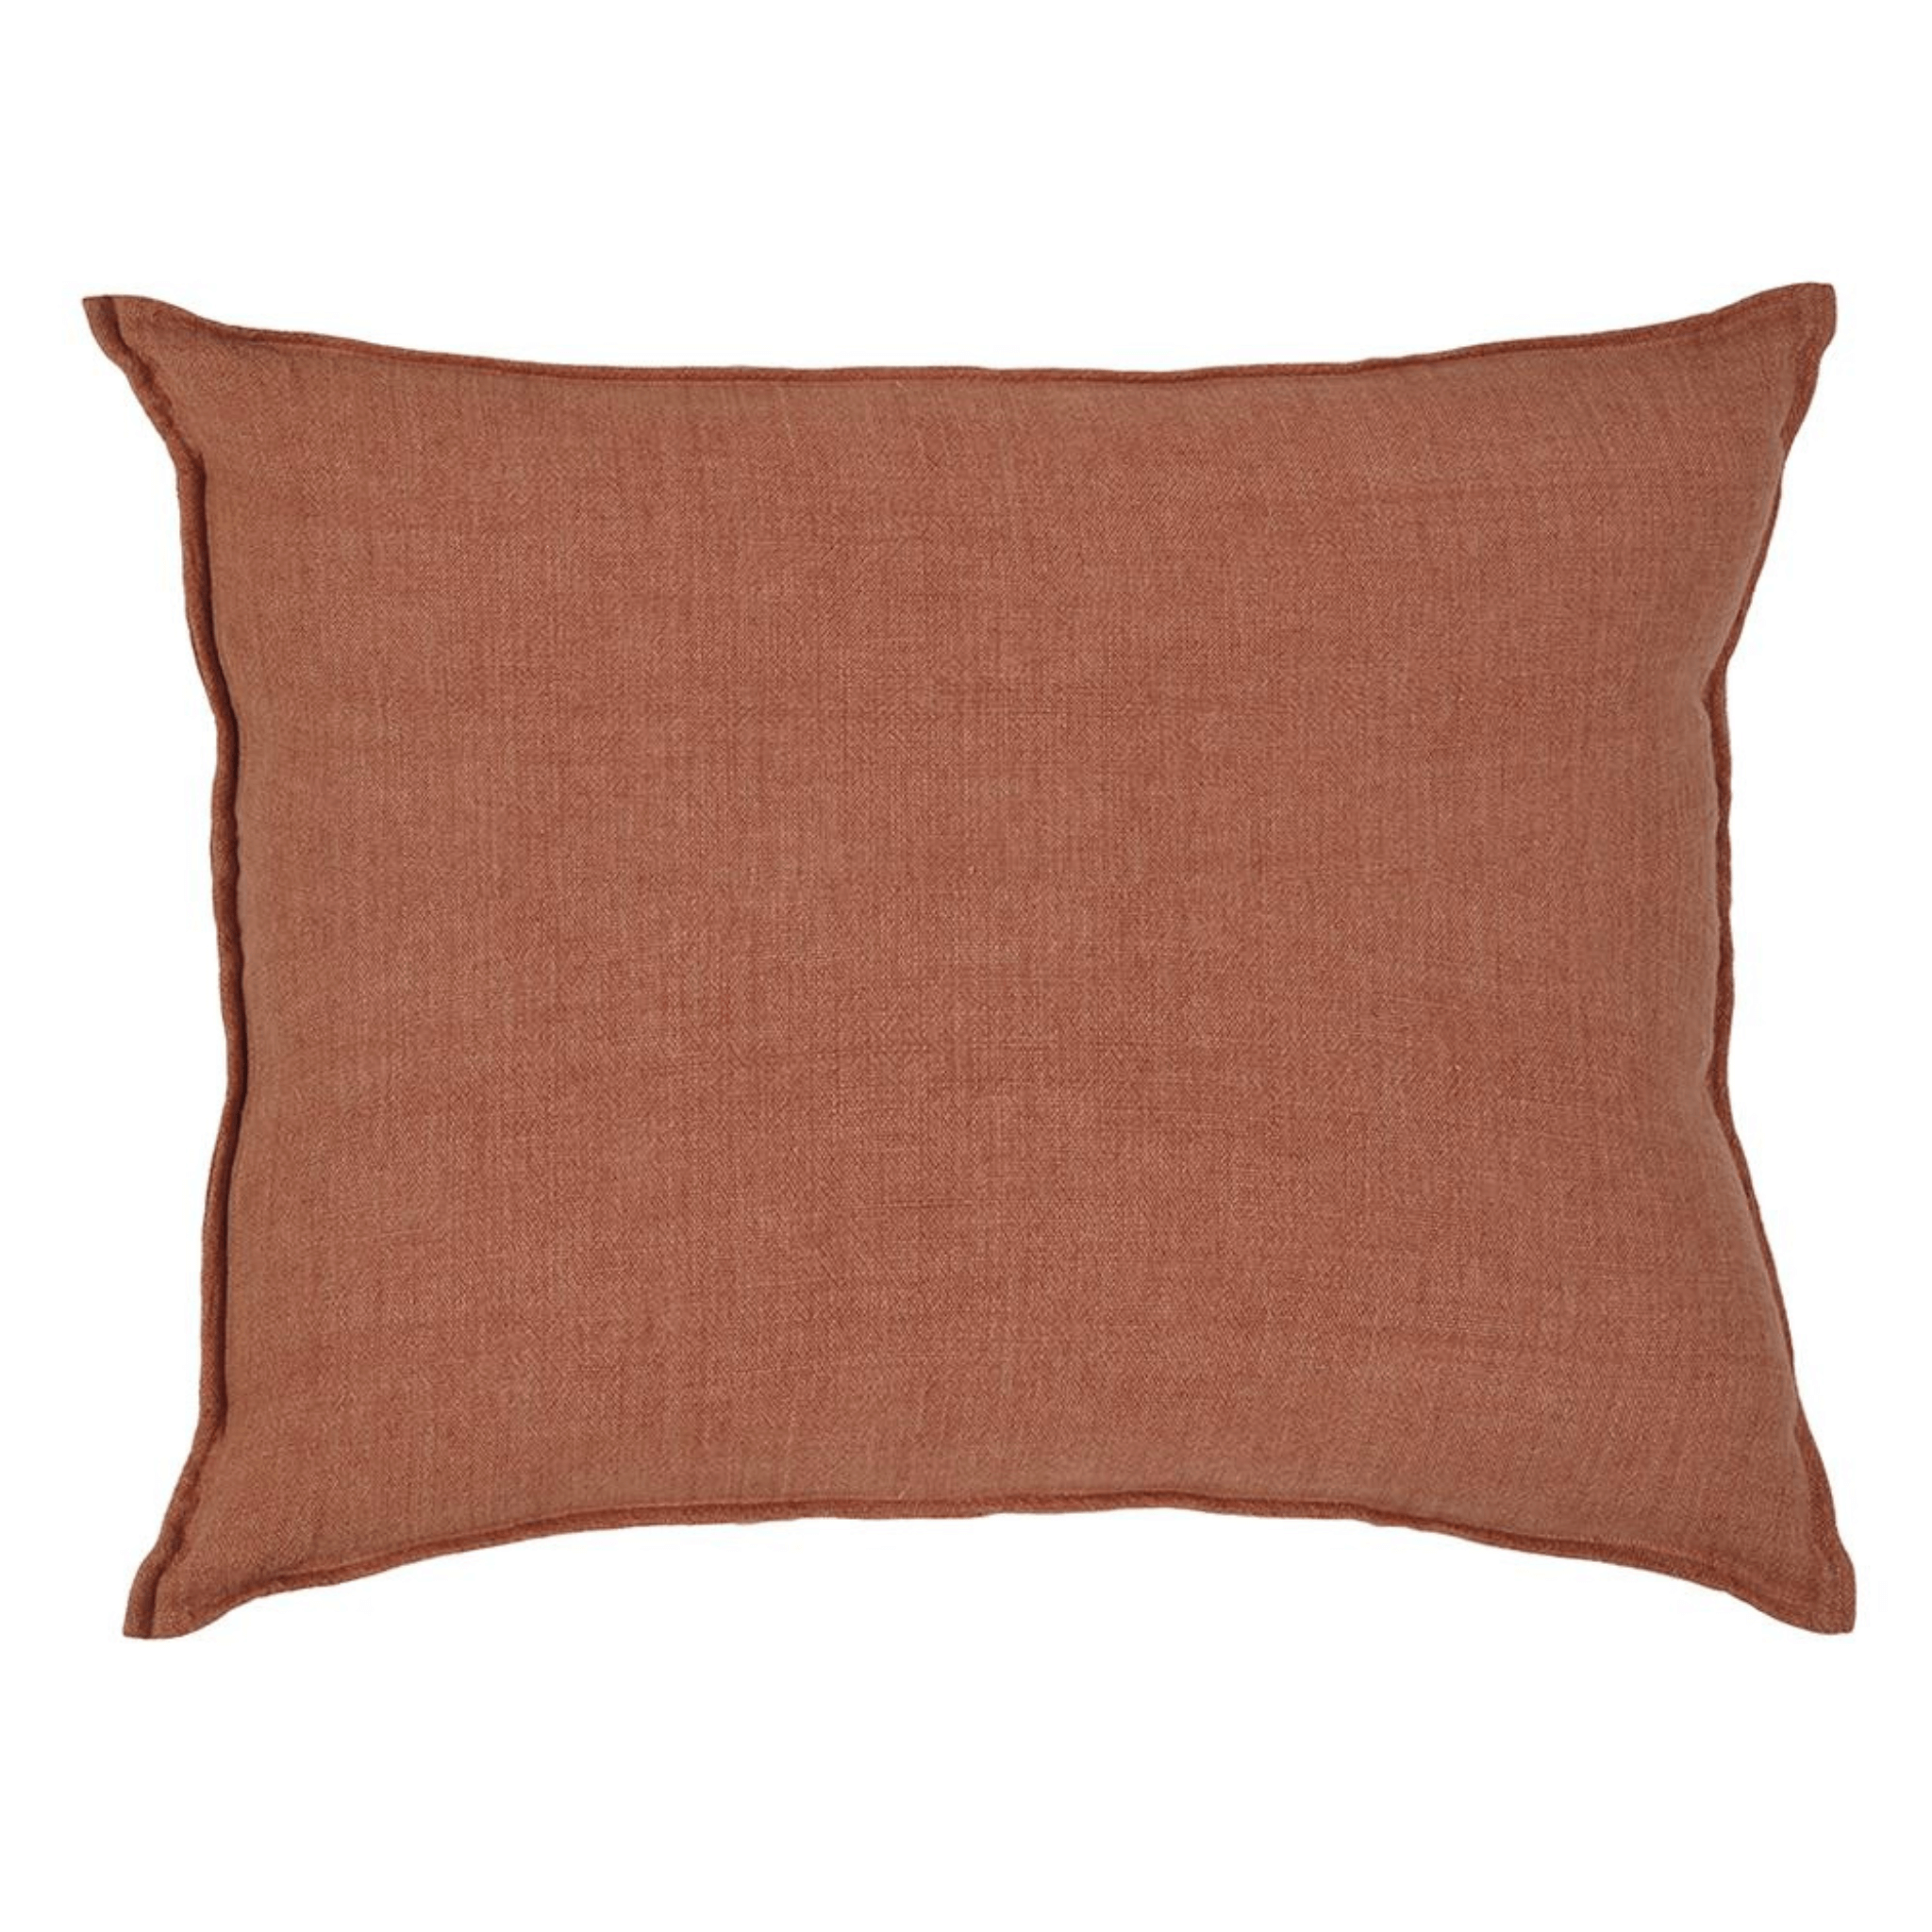 MONTAUK BLANKET - 7 Colors-big pillow-Pom Pom at Home